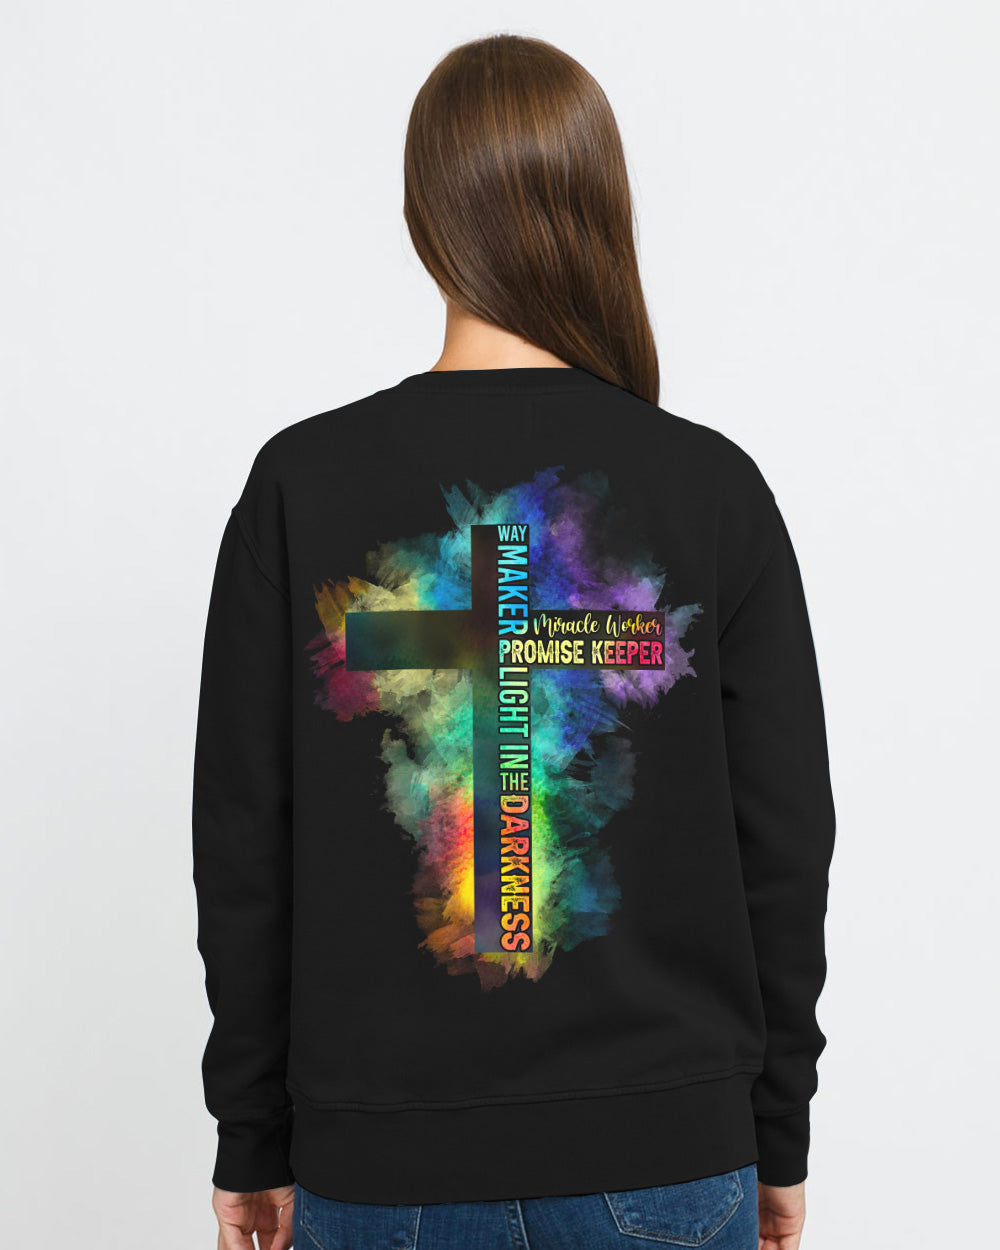 Way Maker Miracle Worker Half Cross Colorful Watercolor Women's Christian Sweatshirt